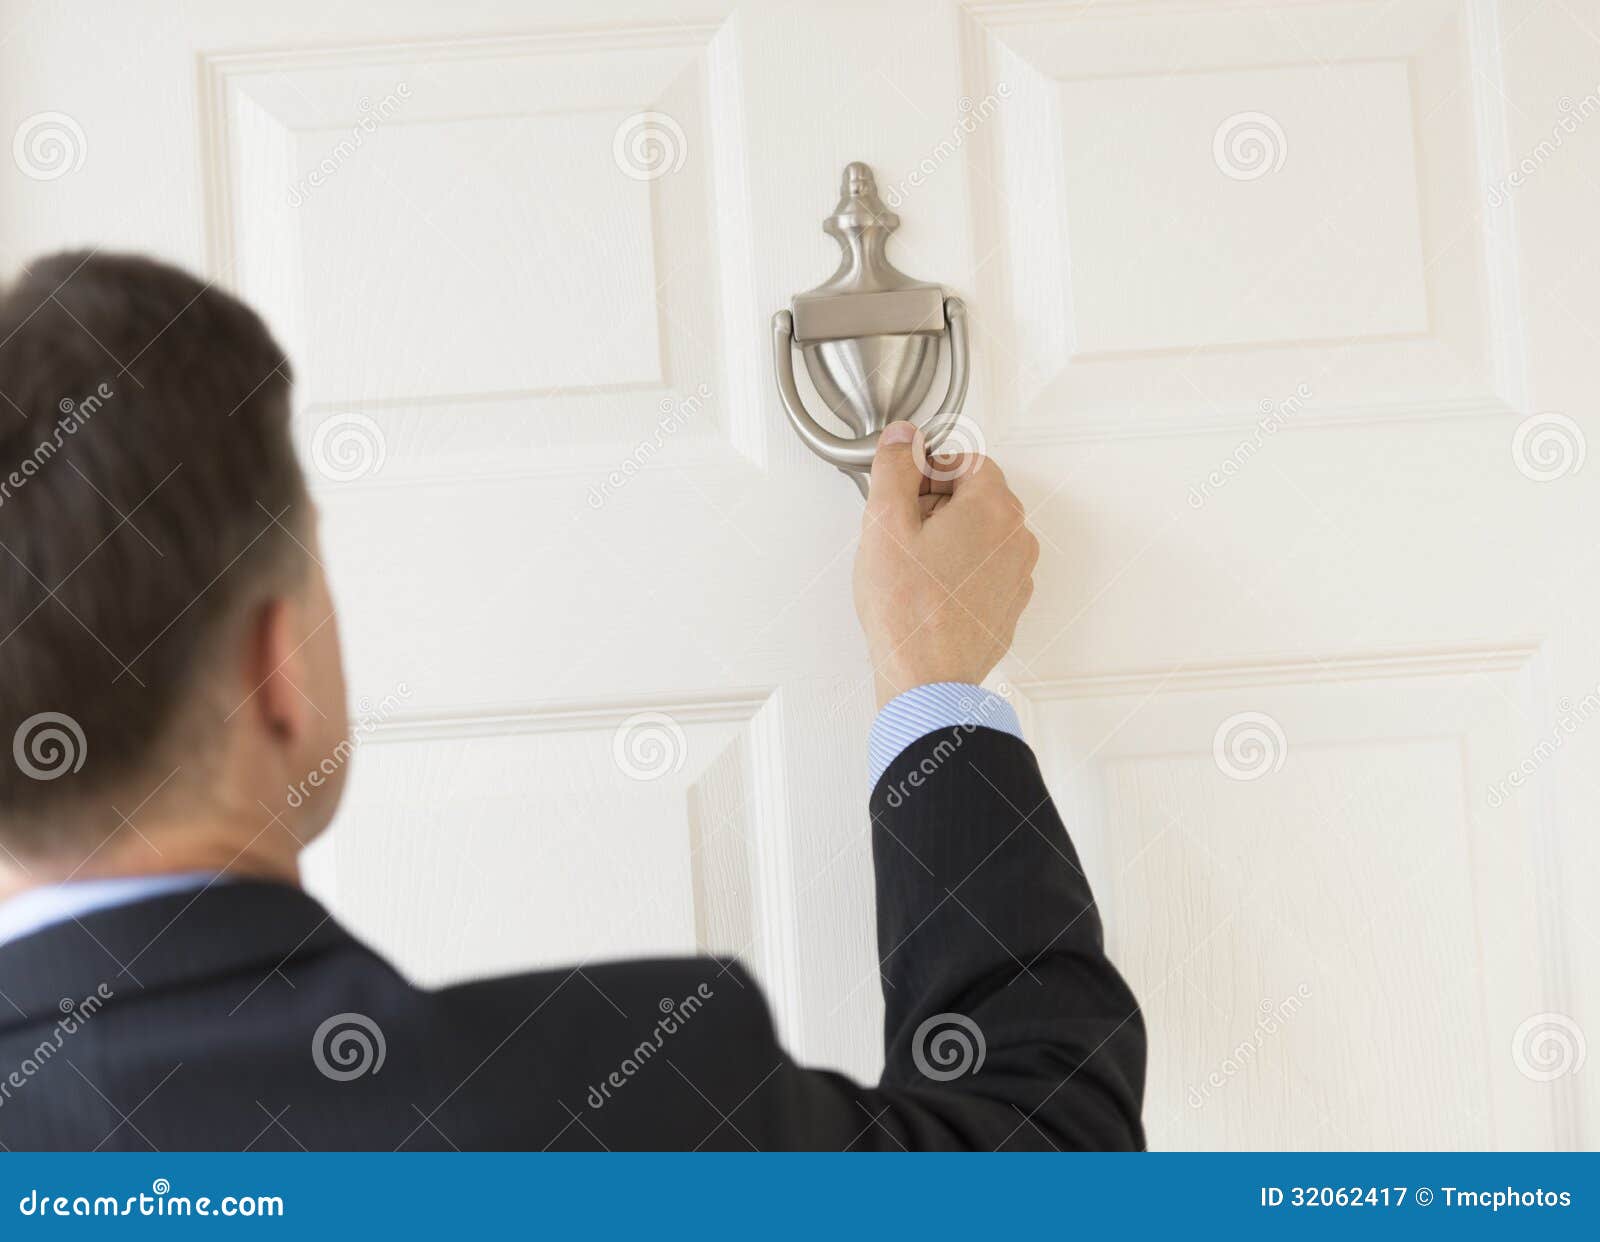 businessman knocking door knocker